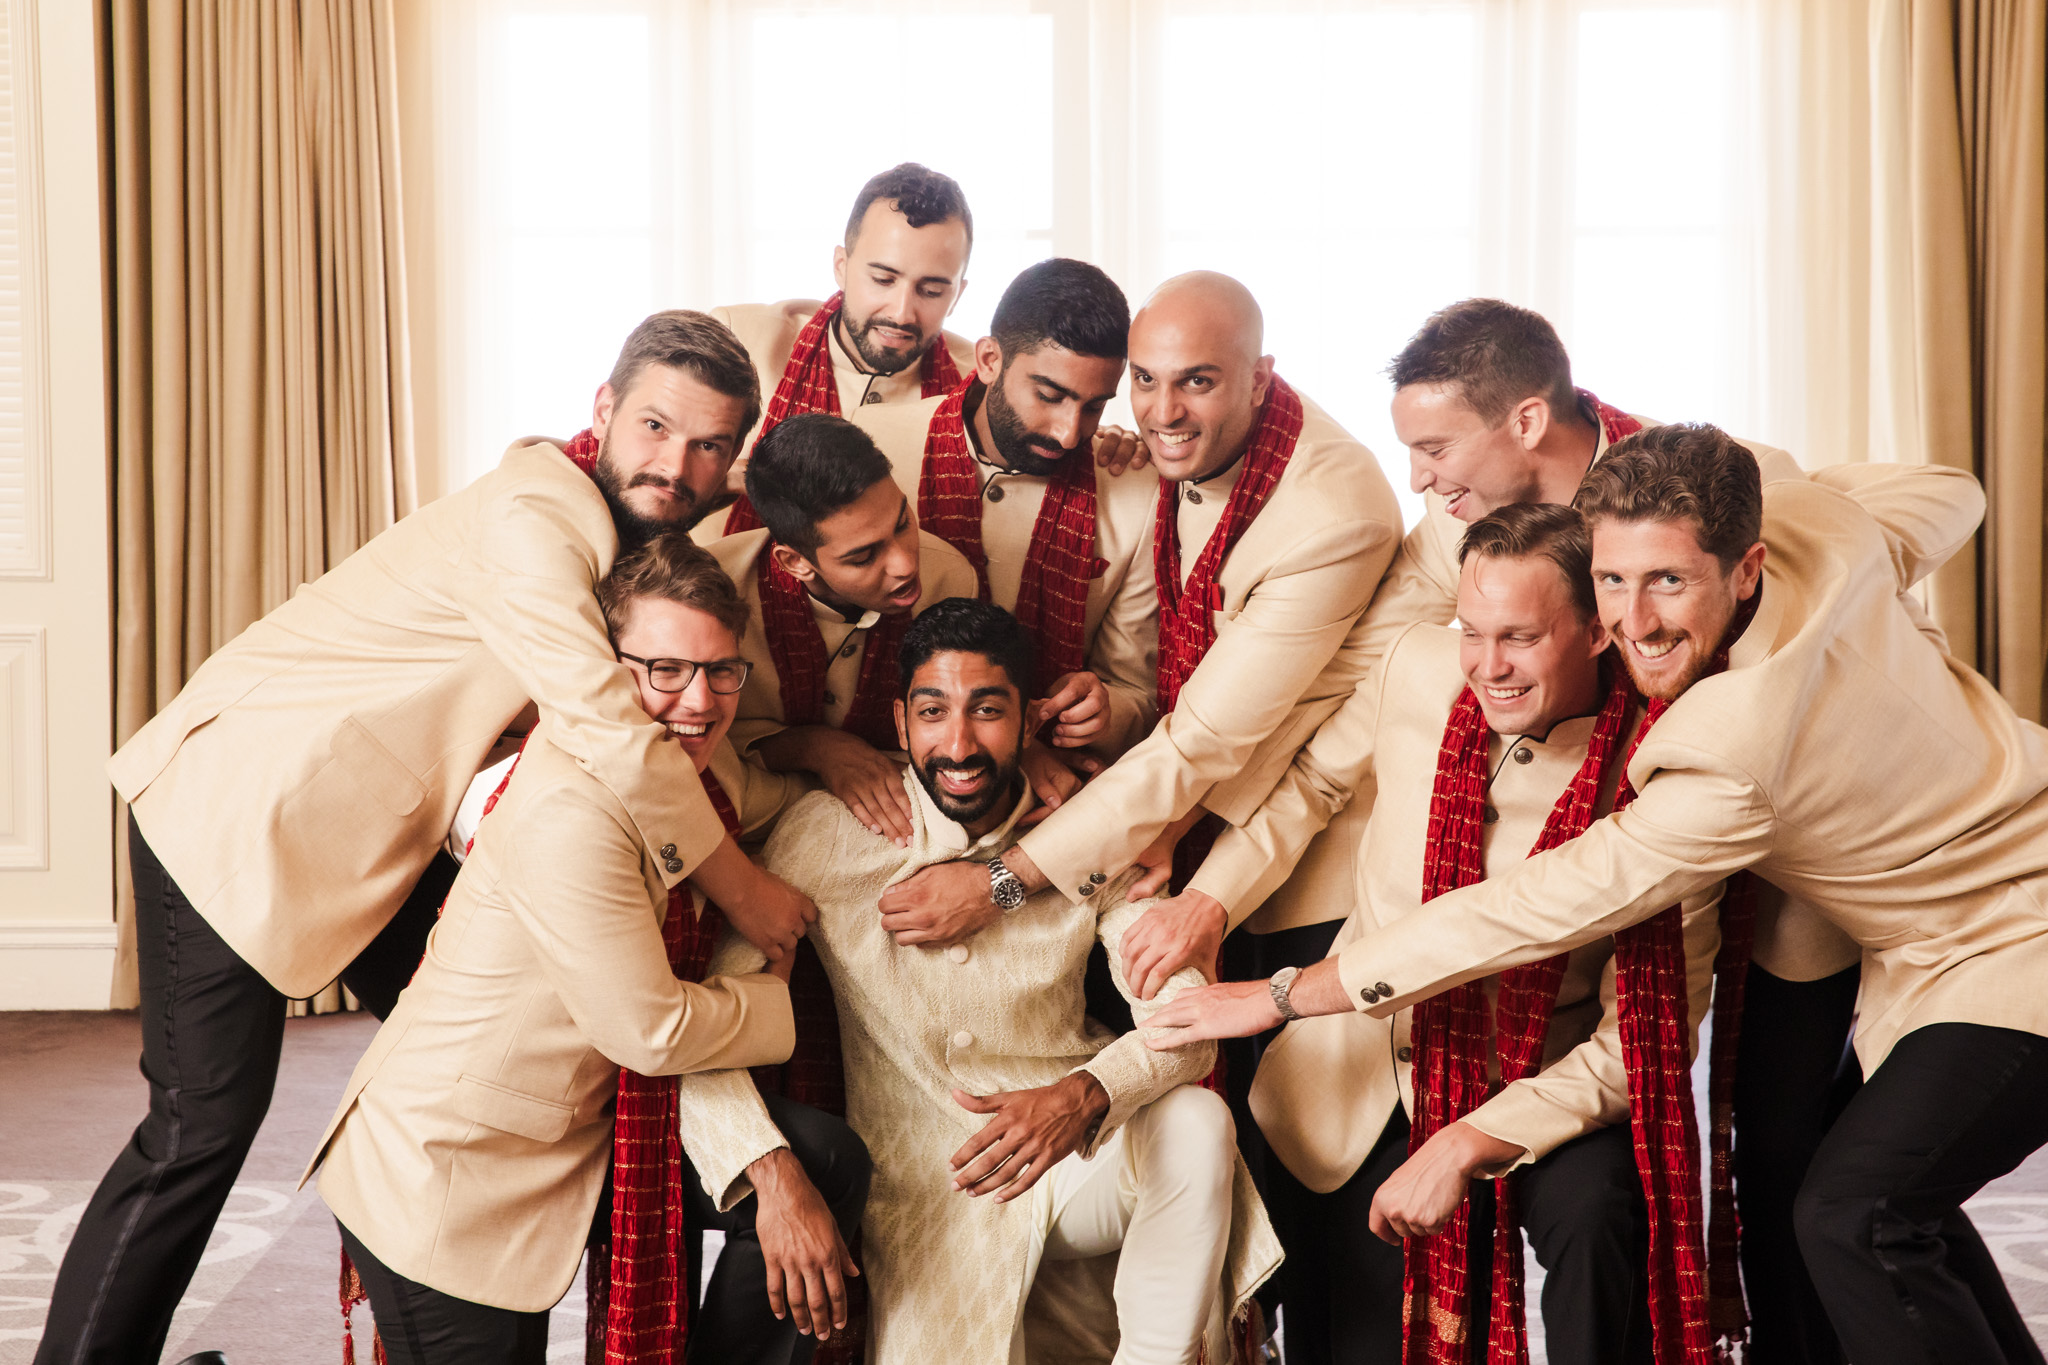 007 ritz carlton laguna niguel indian groomsmen wedding photography